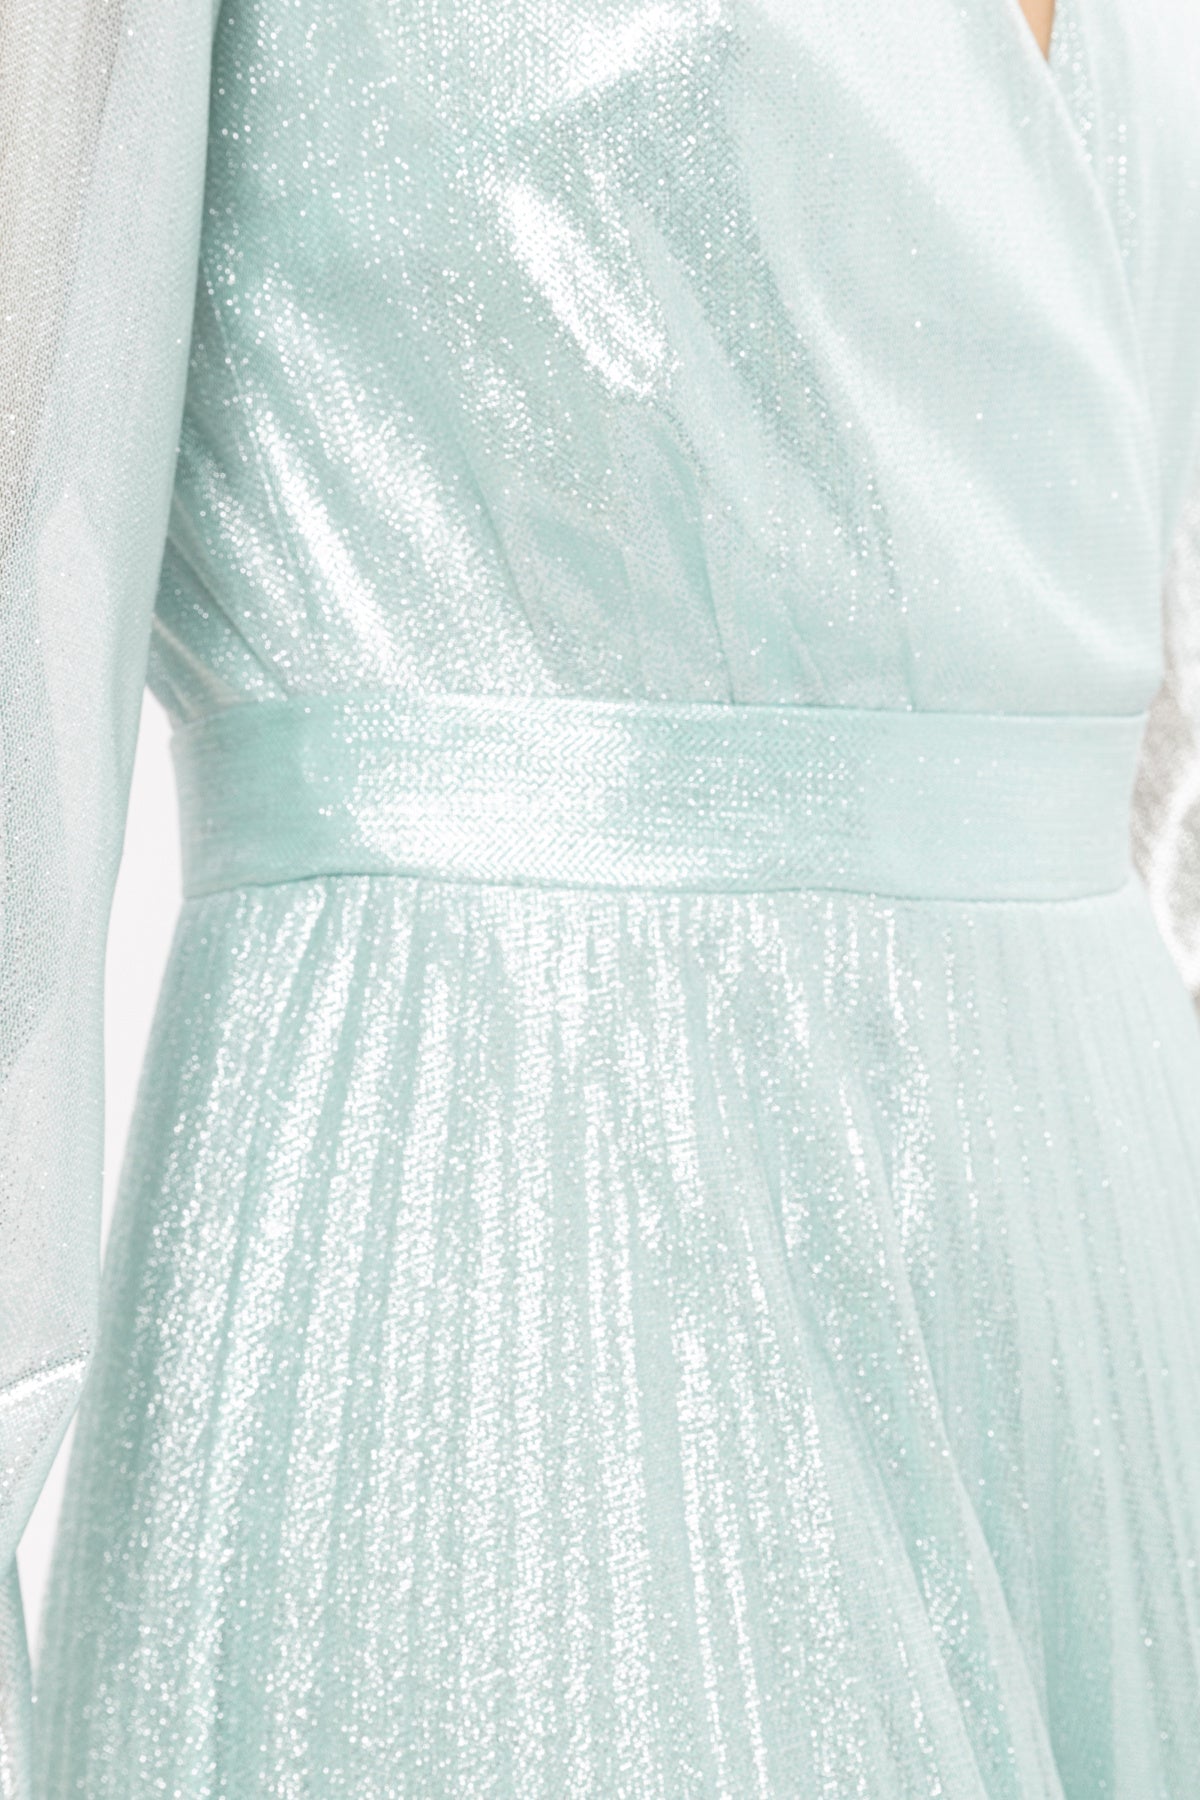 Pleated Bridesmaid Dress with Slit